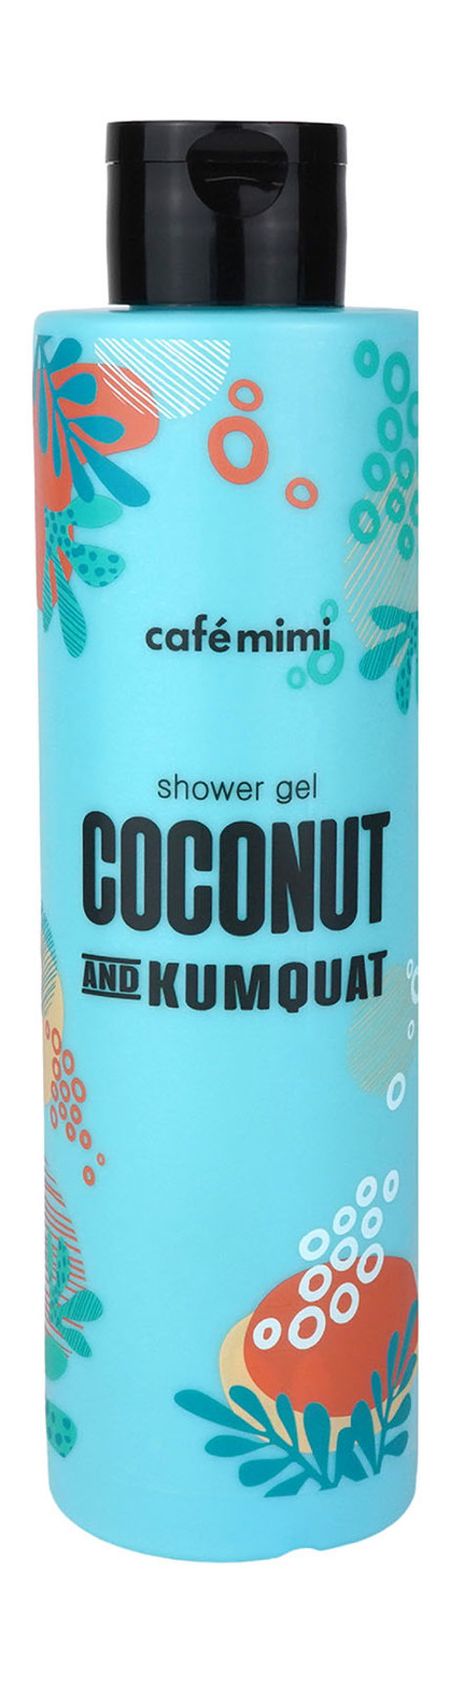 café mimi coconut and kumquat shower gel